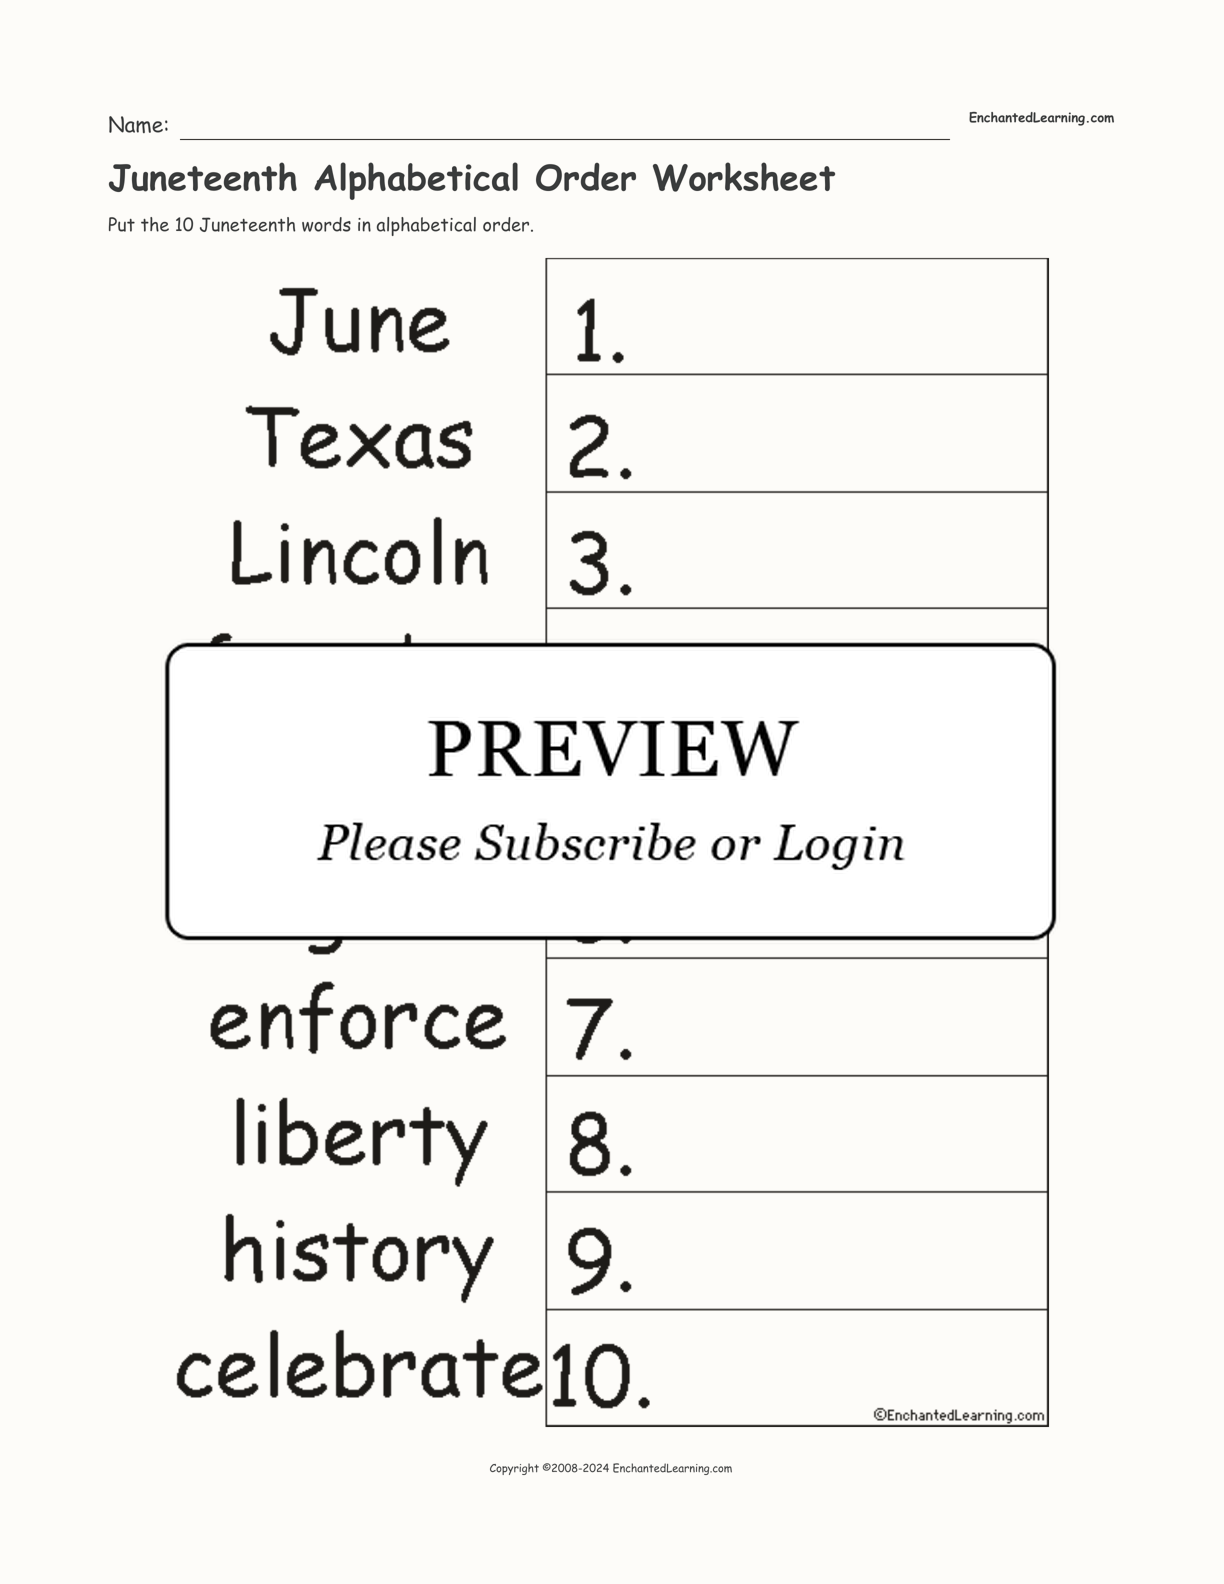 Juneteenth Alphabetical Order Worksheet interactive worksheet page 1